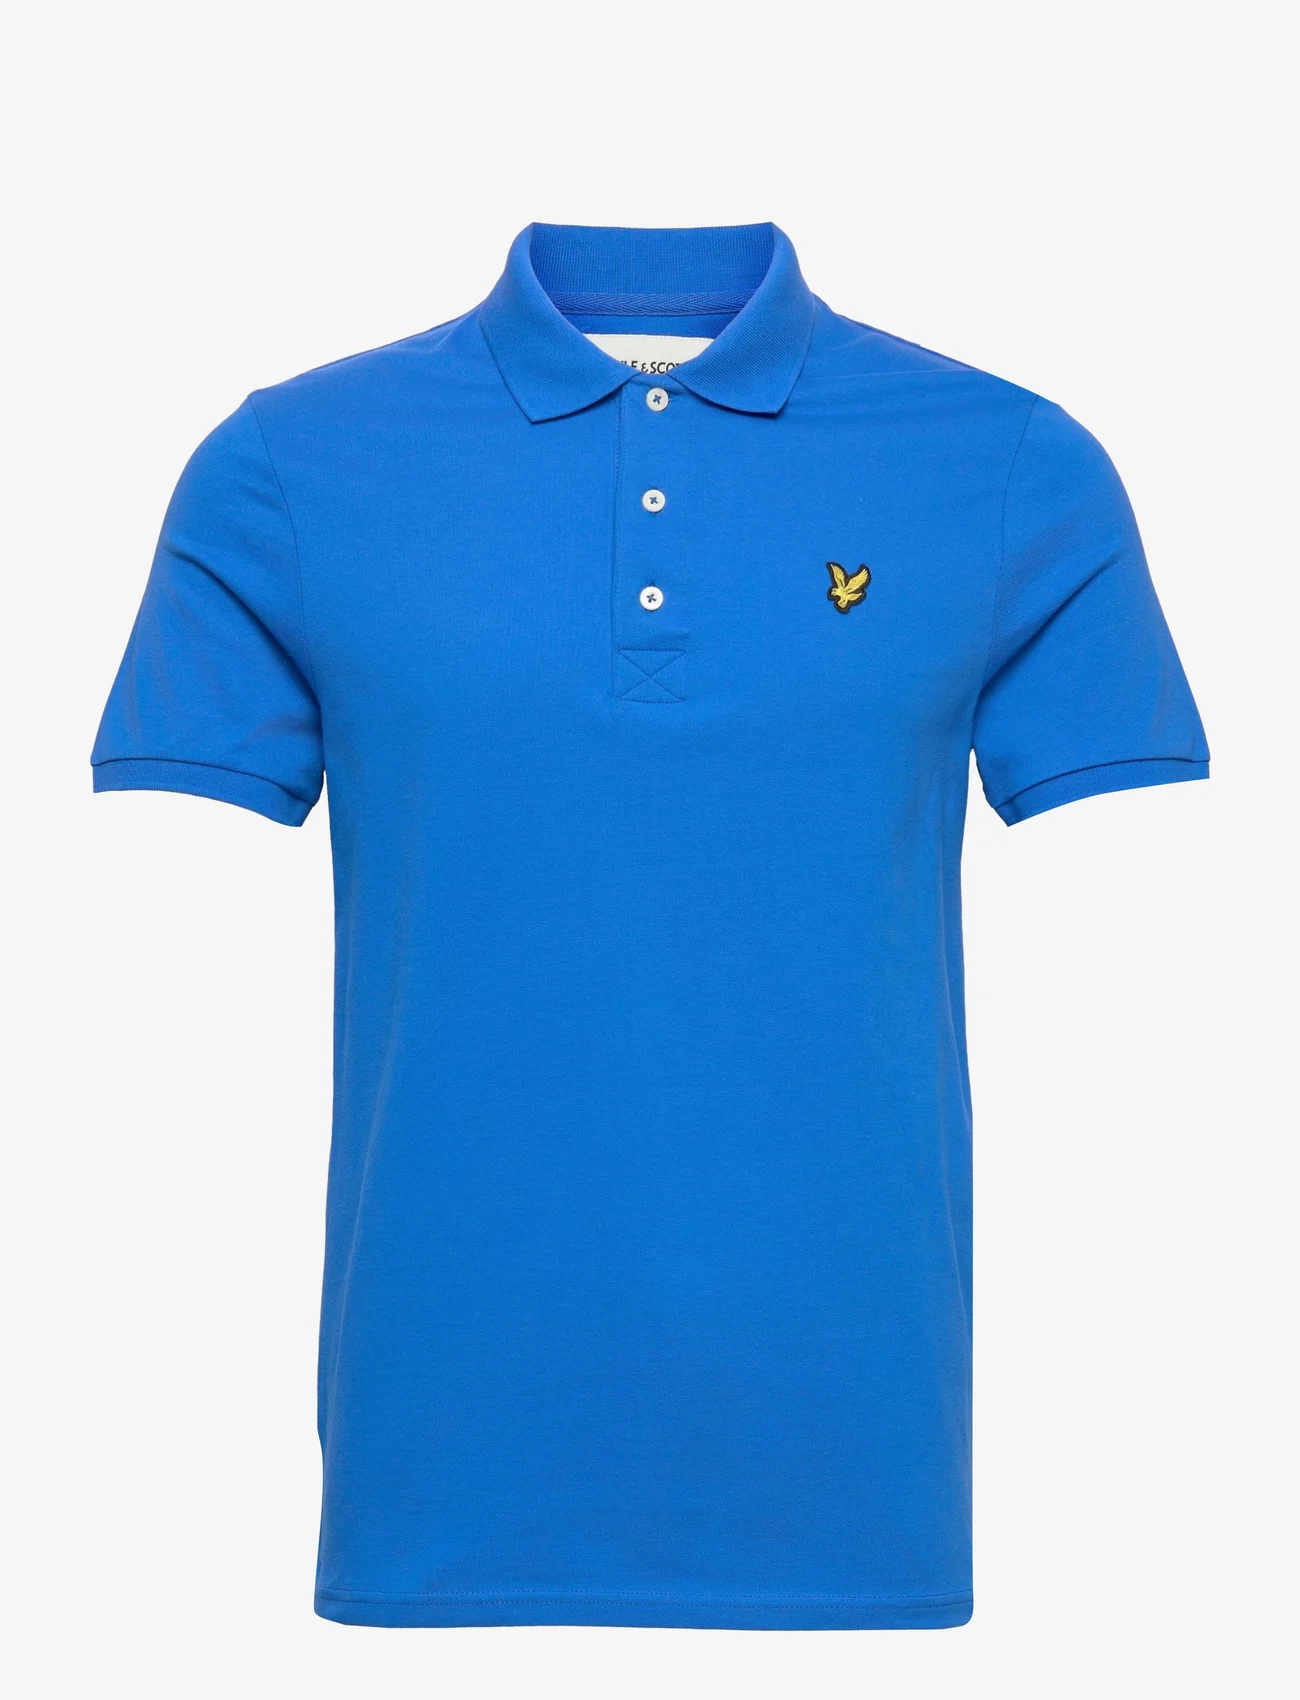 Lyle & Scott - Plain Polo Shirt - lyhythihaiset - bright blue - 0